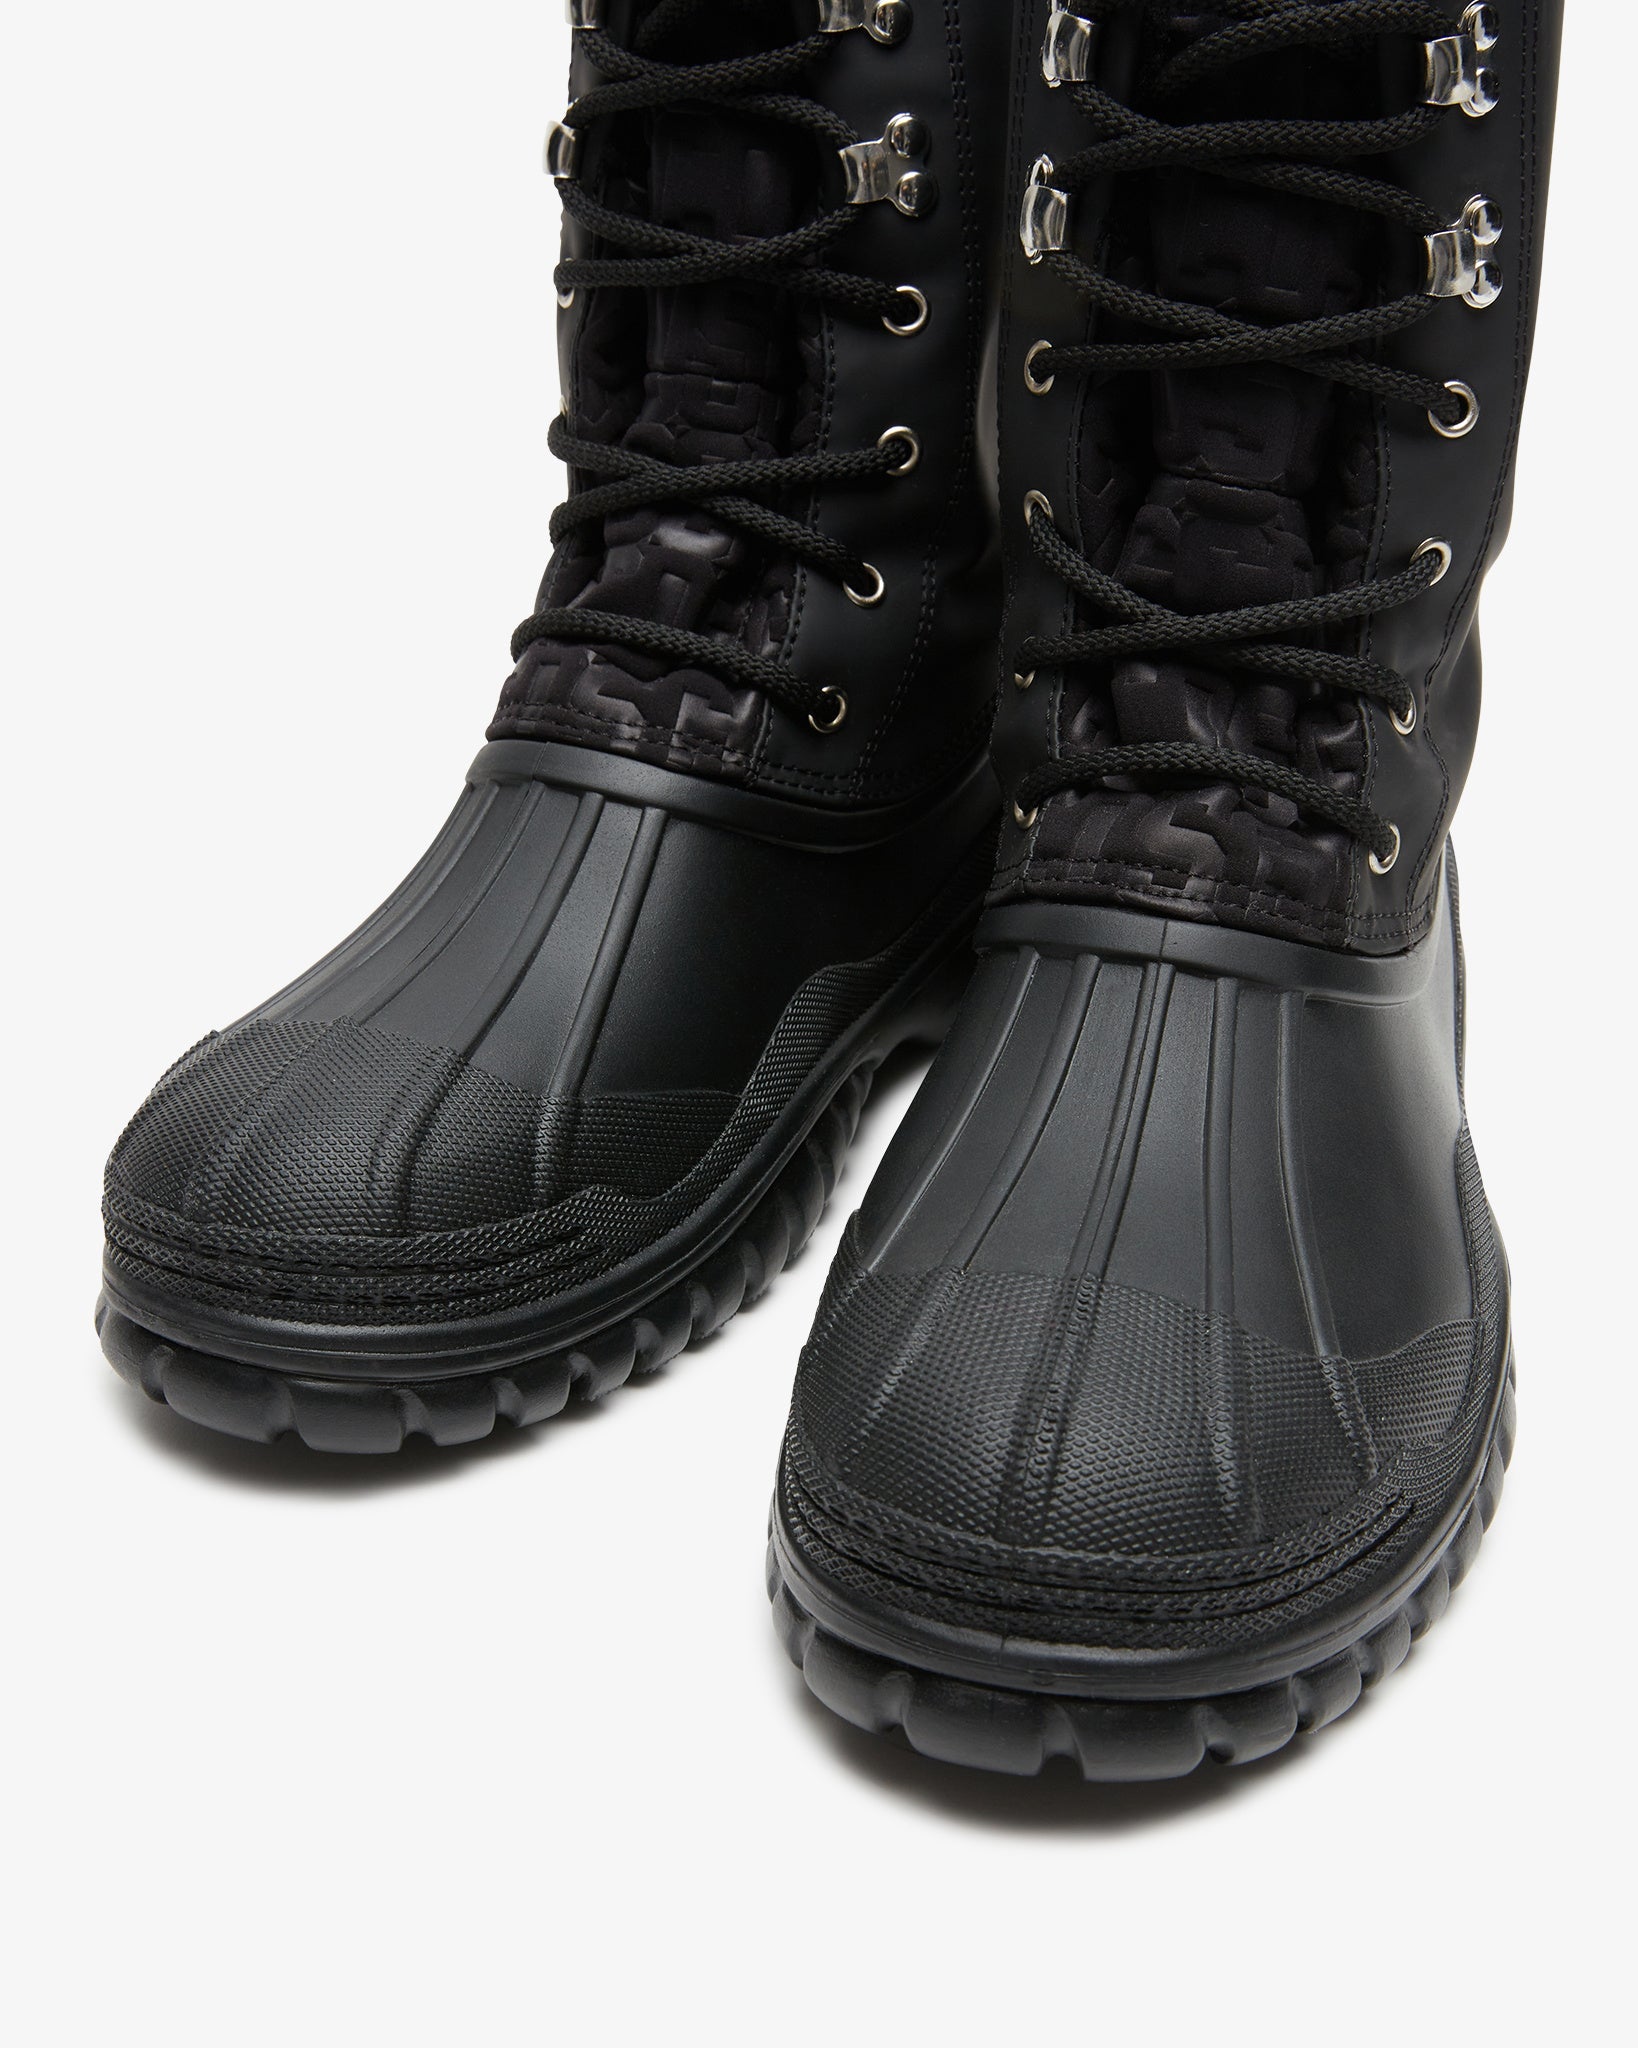 Monogram Snow Boots : Unisex Boots Black | GCDS®